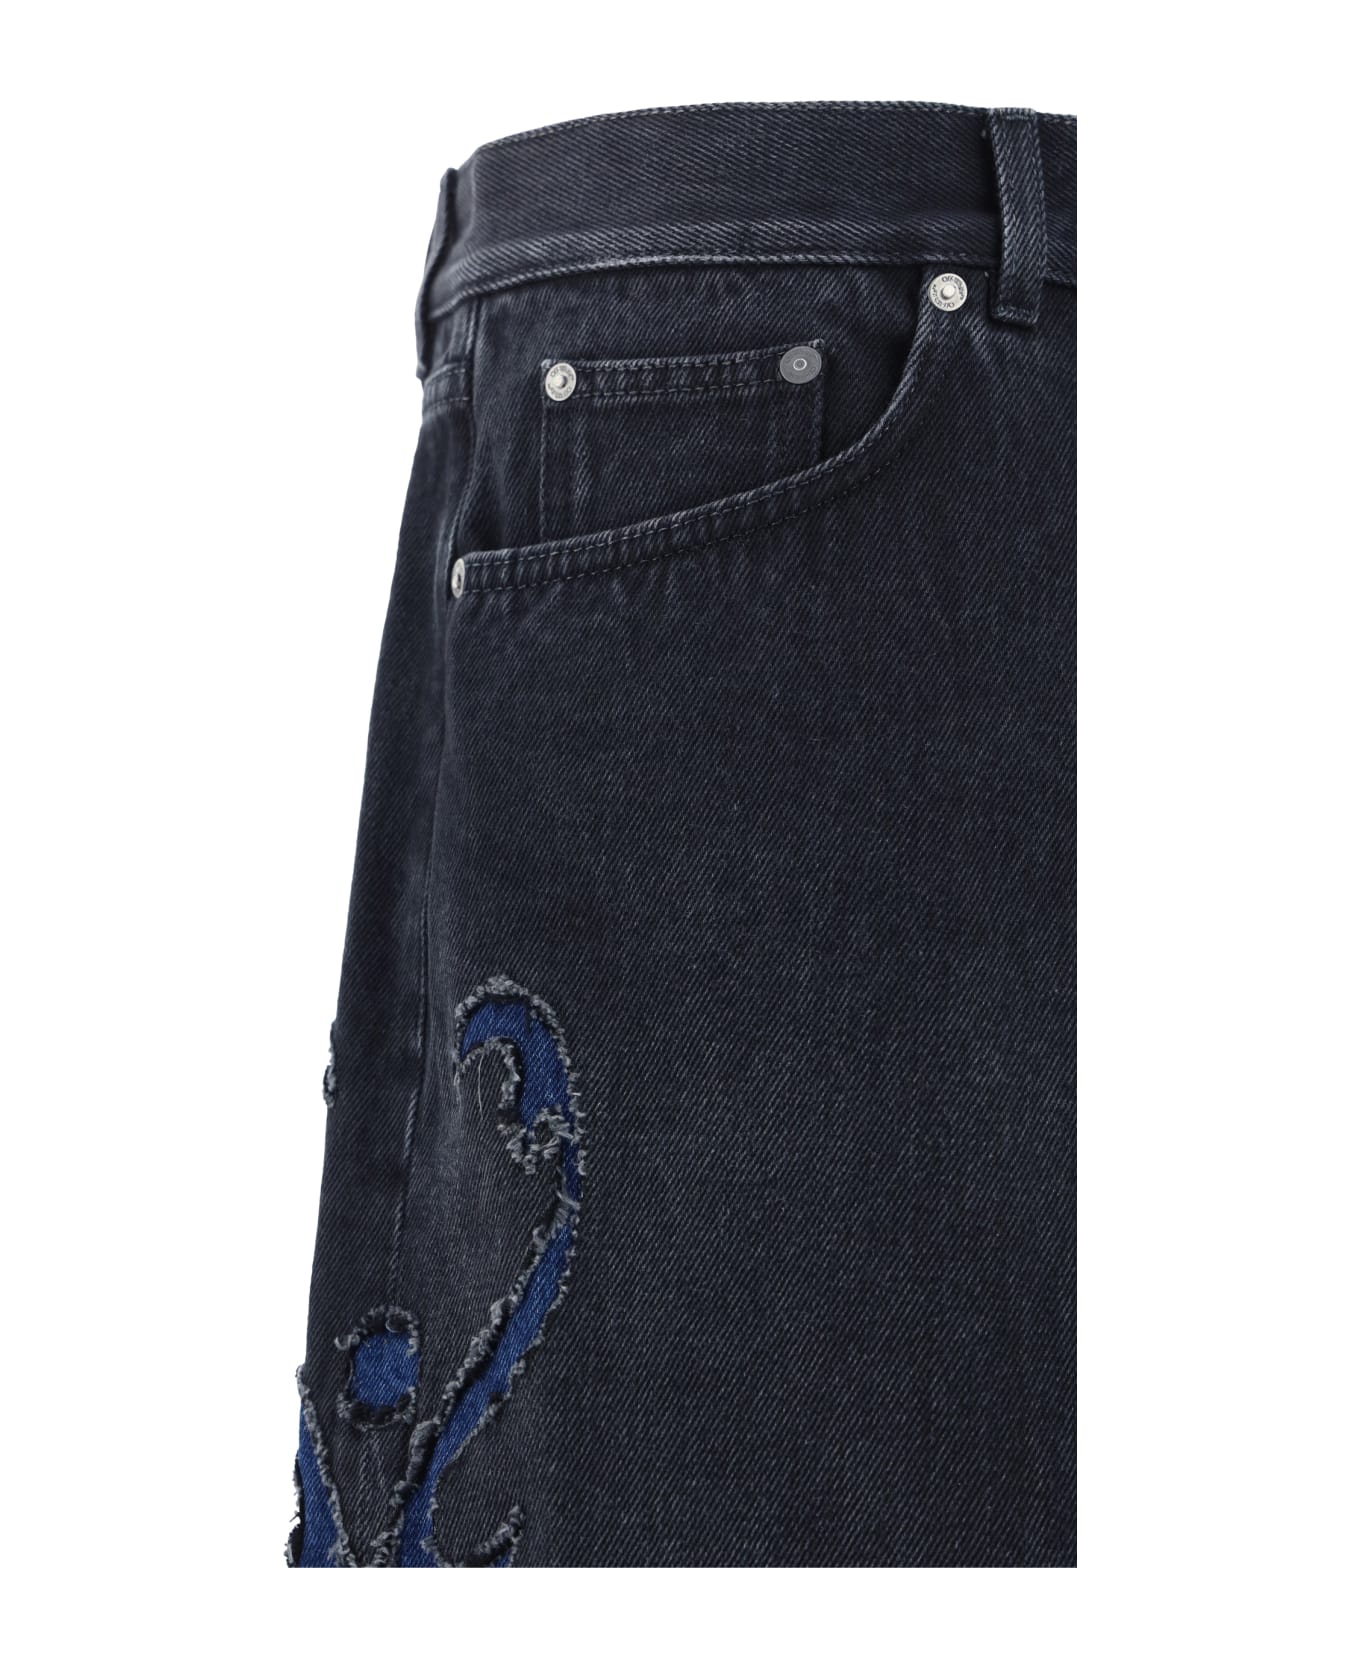 Off-White Super Baggy Jeans - Vintage Black  Nautical Blue デニム